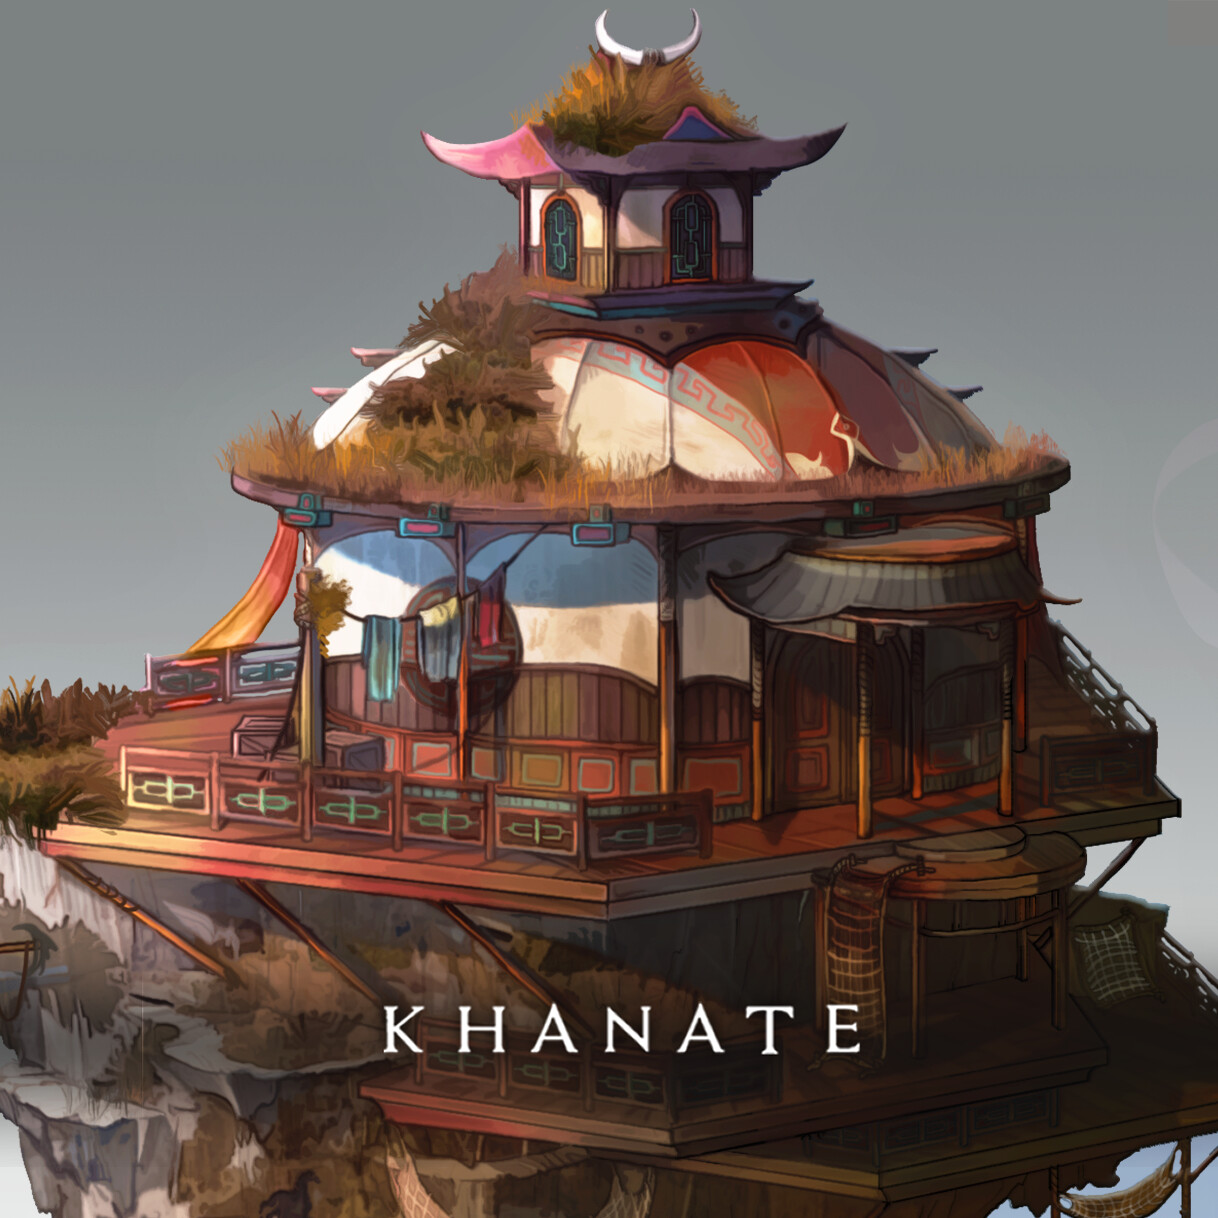 Khanate: Mountain Yurt